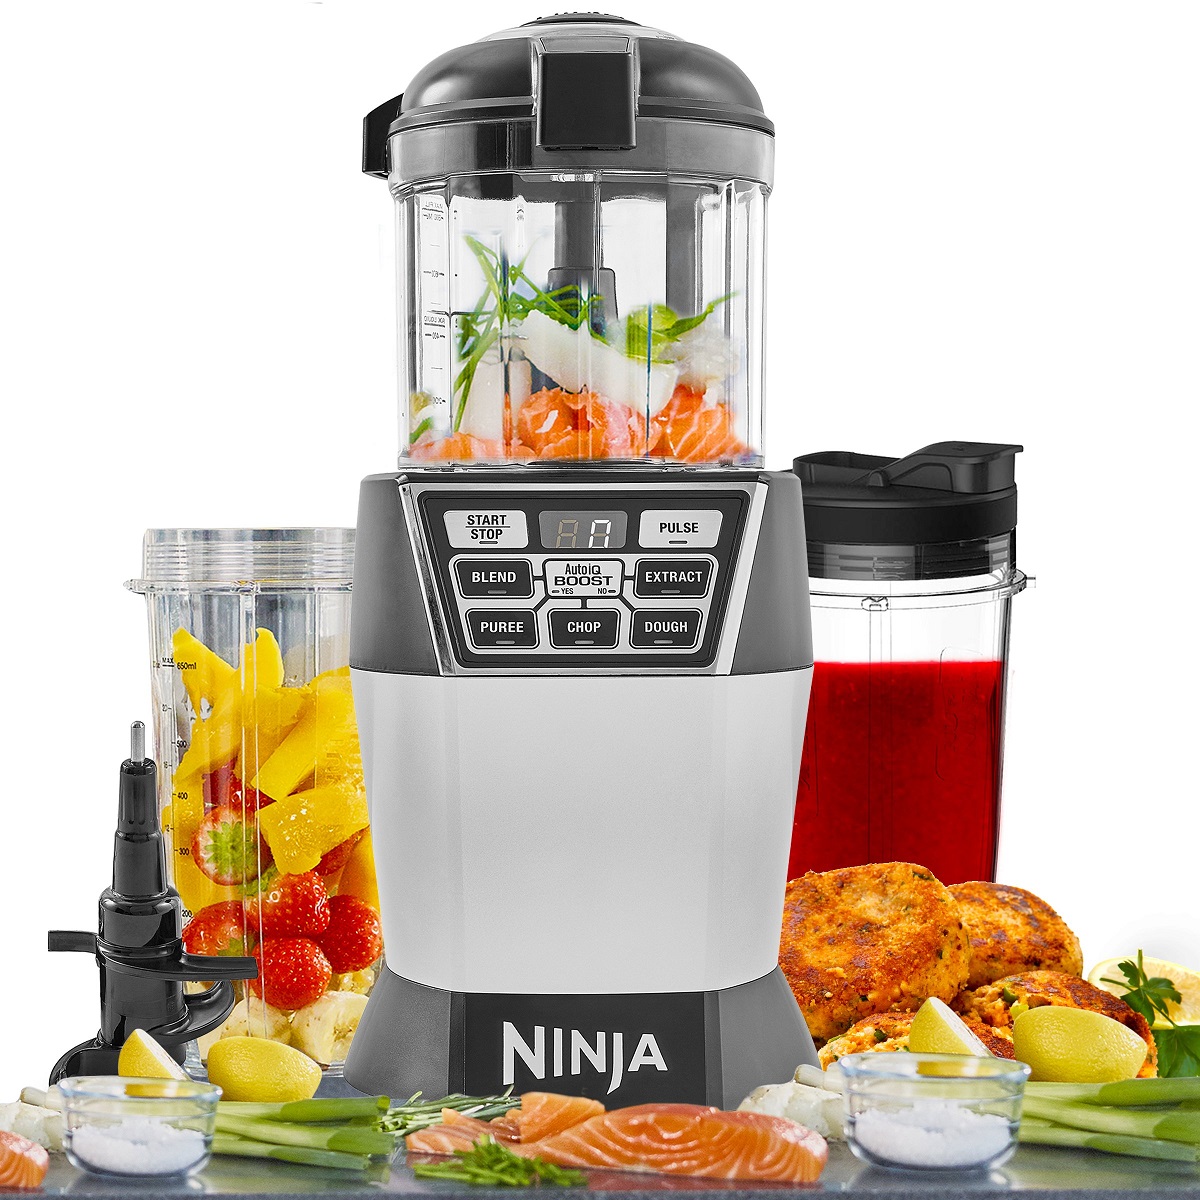 11 Amazing Ninja Food Processor And Blender for 2023